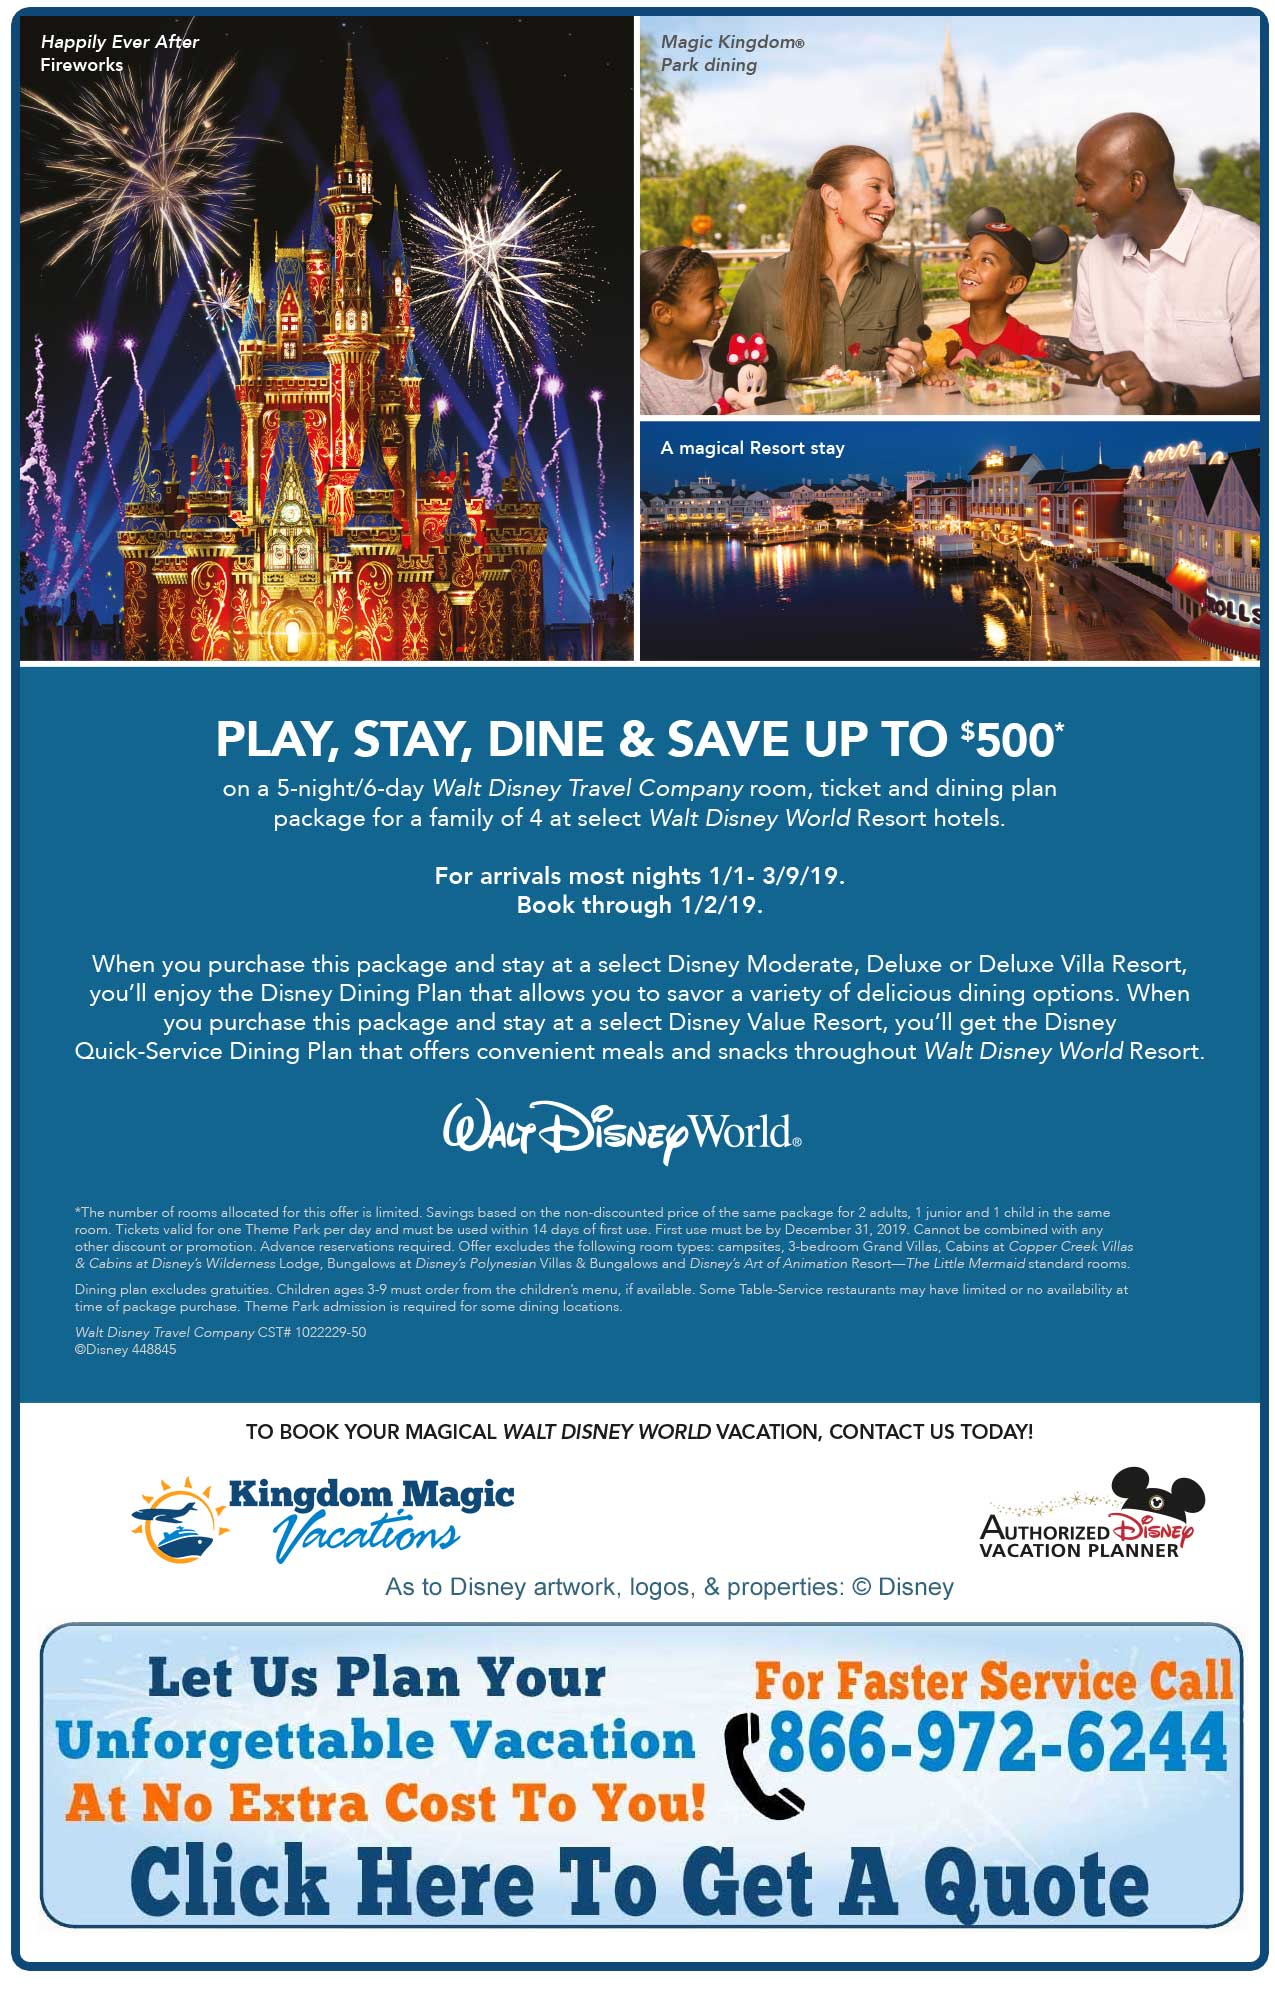 Play, Stay, Dine and Save At Walt Disney World Kingdom Magic Vacations